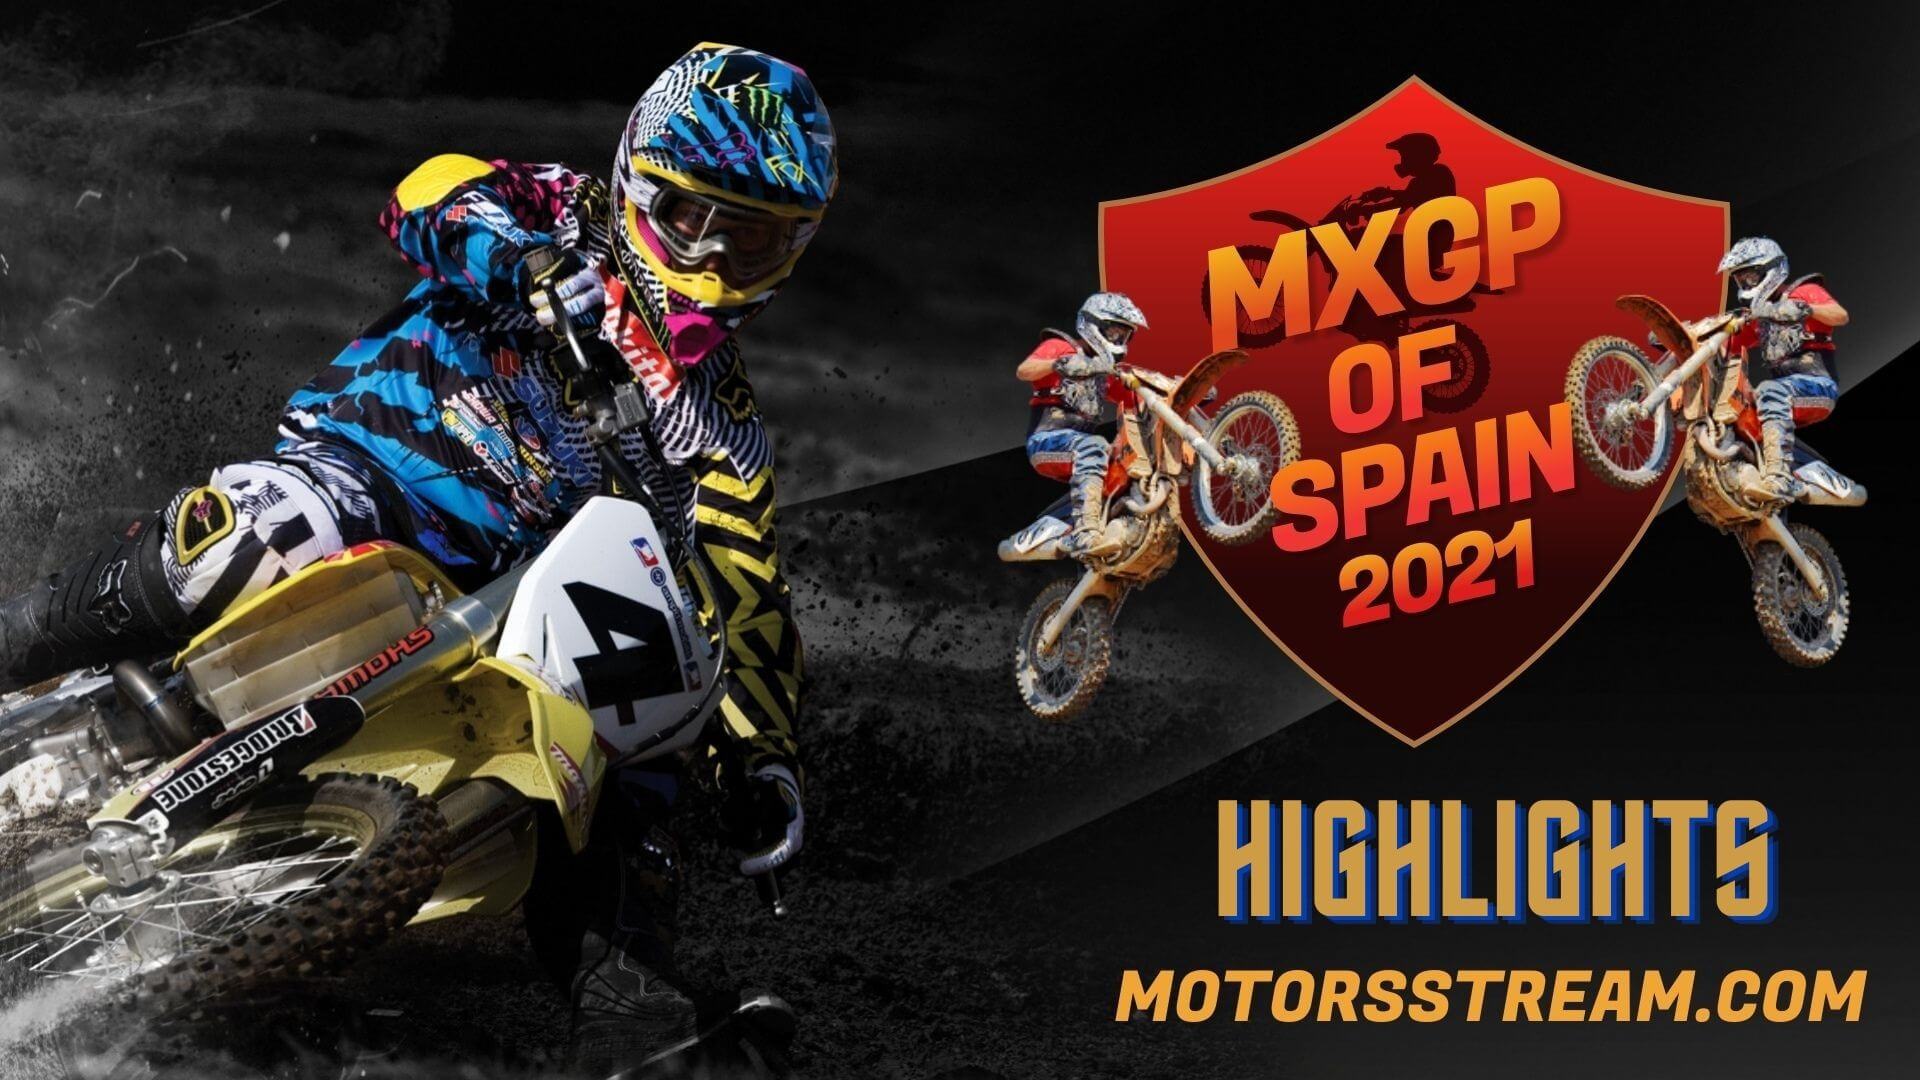 FIM Motocross Spain Highlights 2021 MXGP